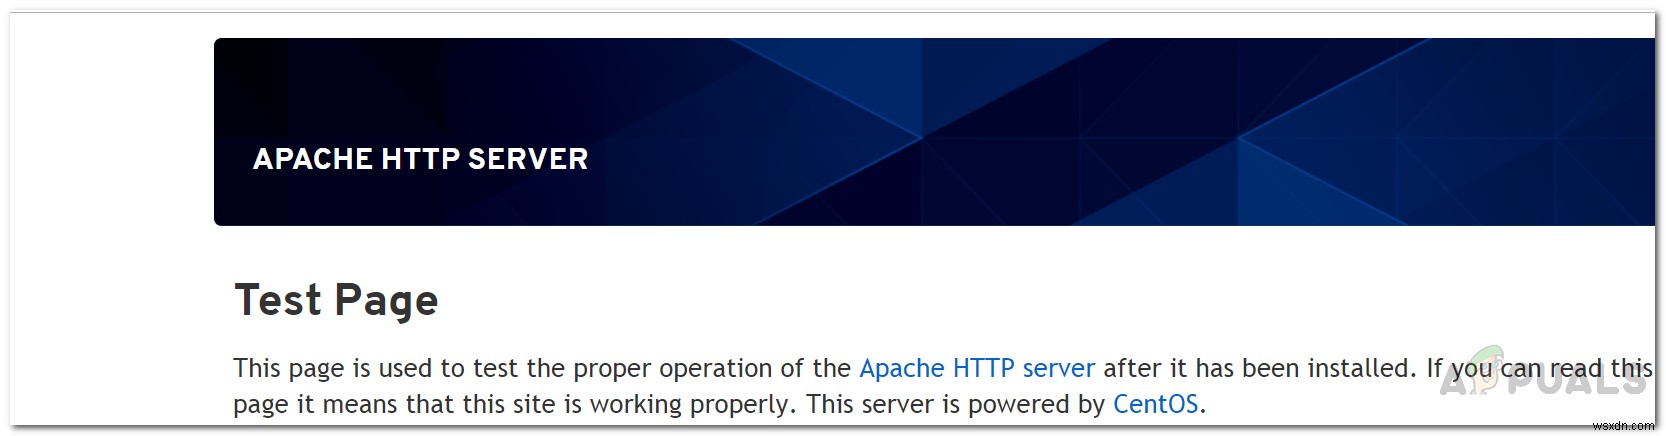 Alibaba Cloud  Elastic Compute Service 에서 WebServer(IIS) 또는 Apache를 구성하는 방법은 무엇입니까? 